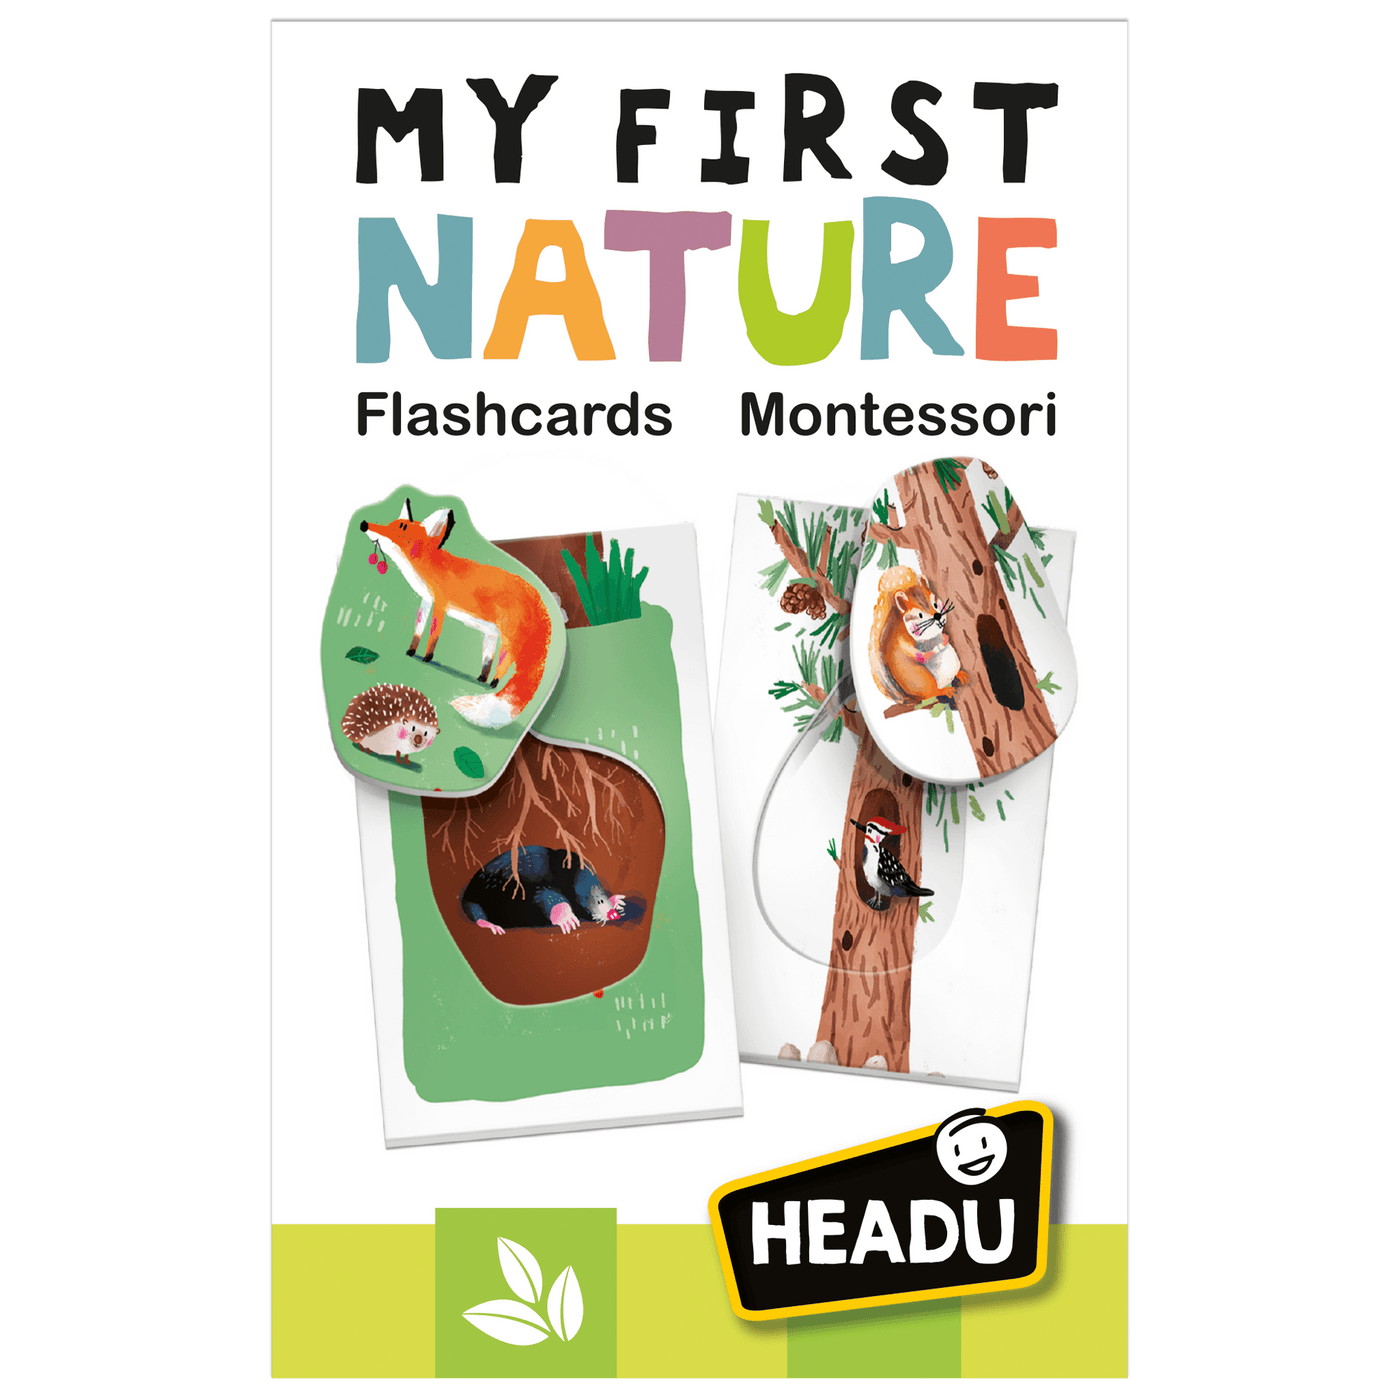 Flashcards: My First Nature (Montessori)